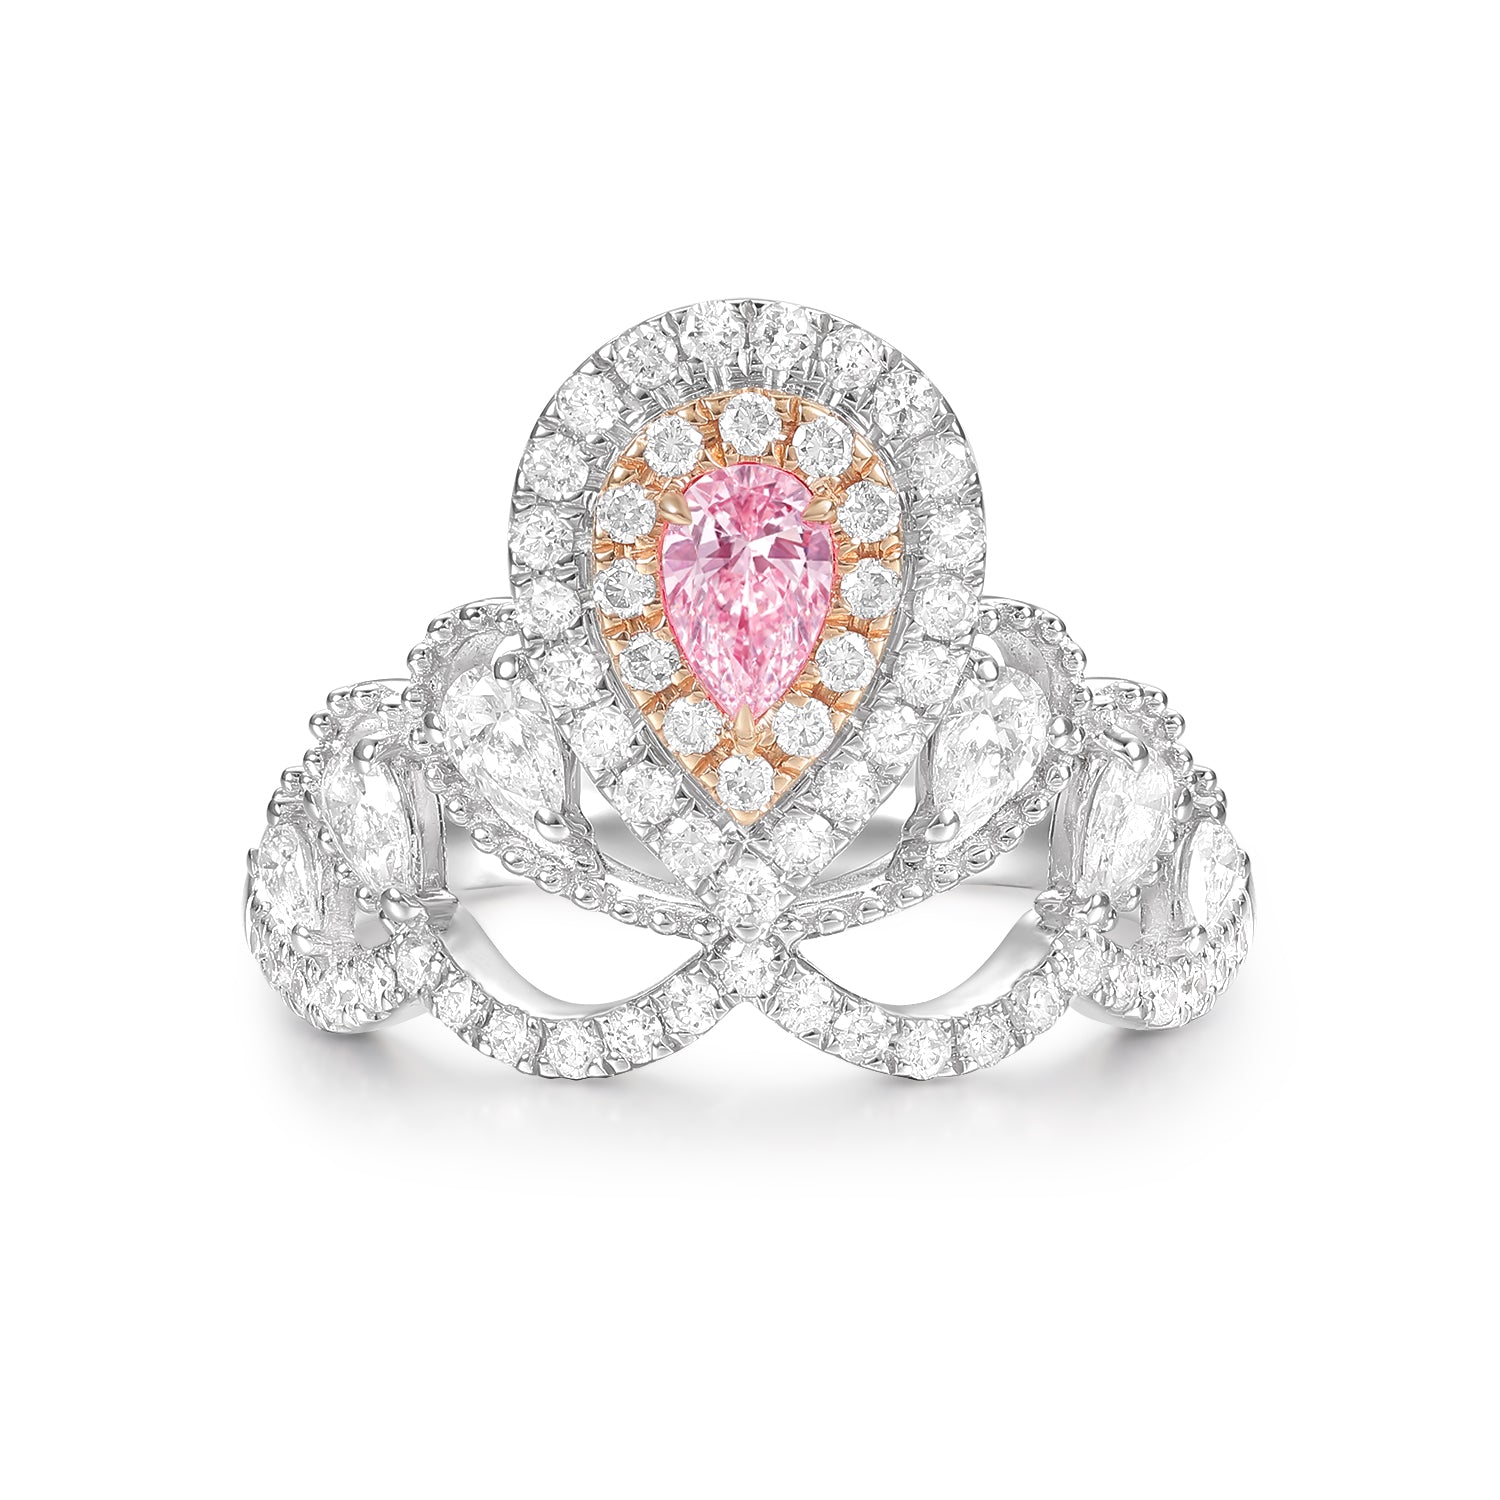 Light Pink Pear-shaped wedding ring | Free worldwide shipping